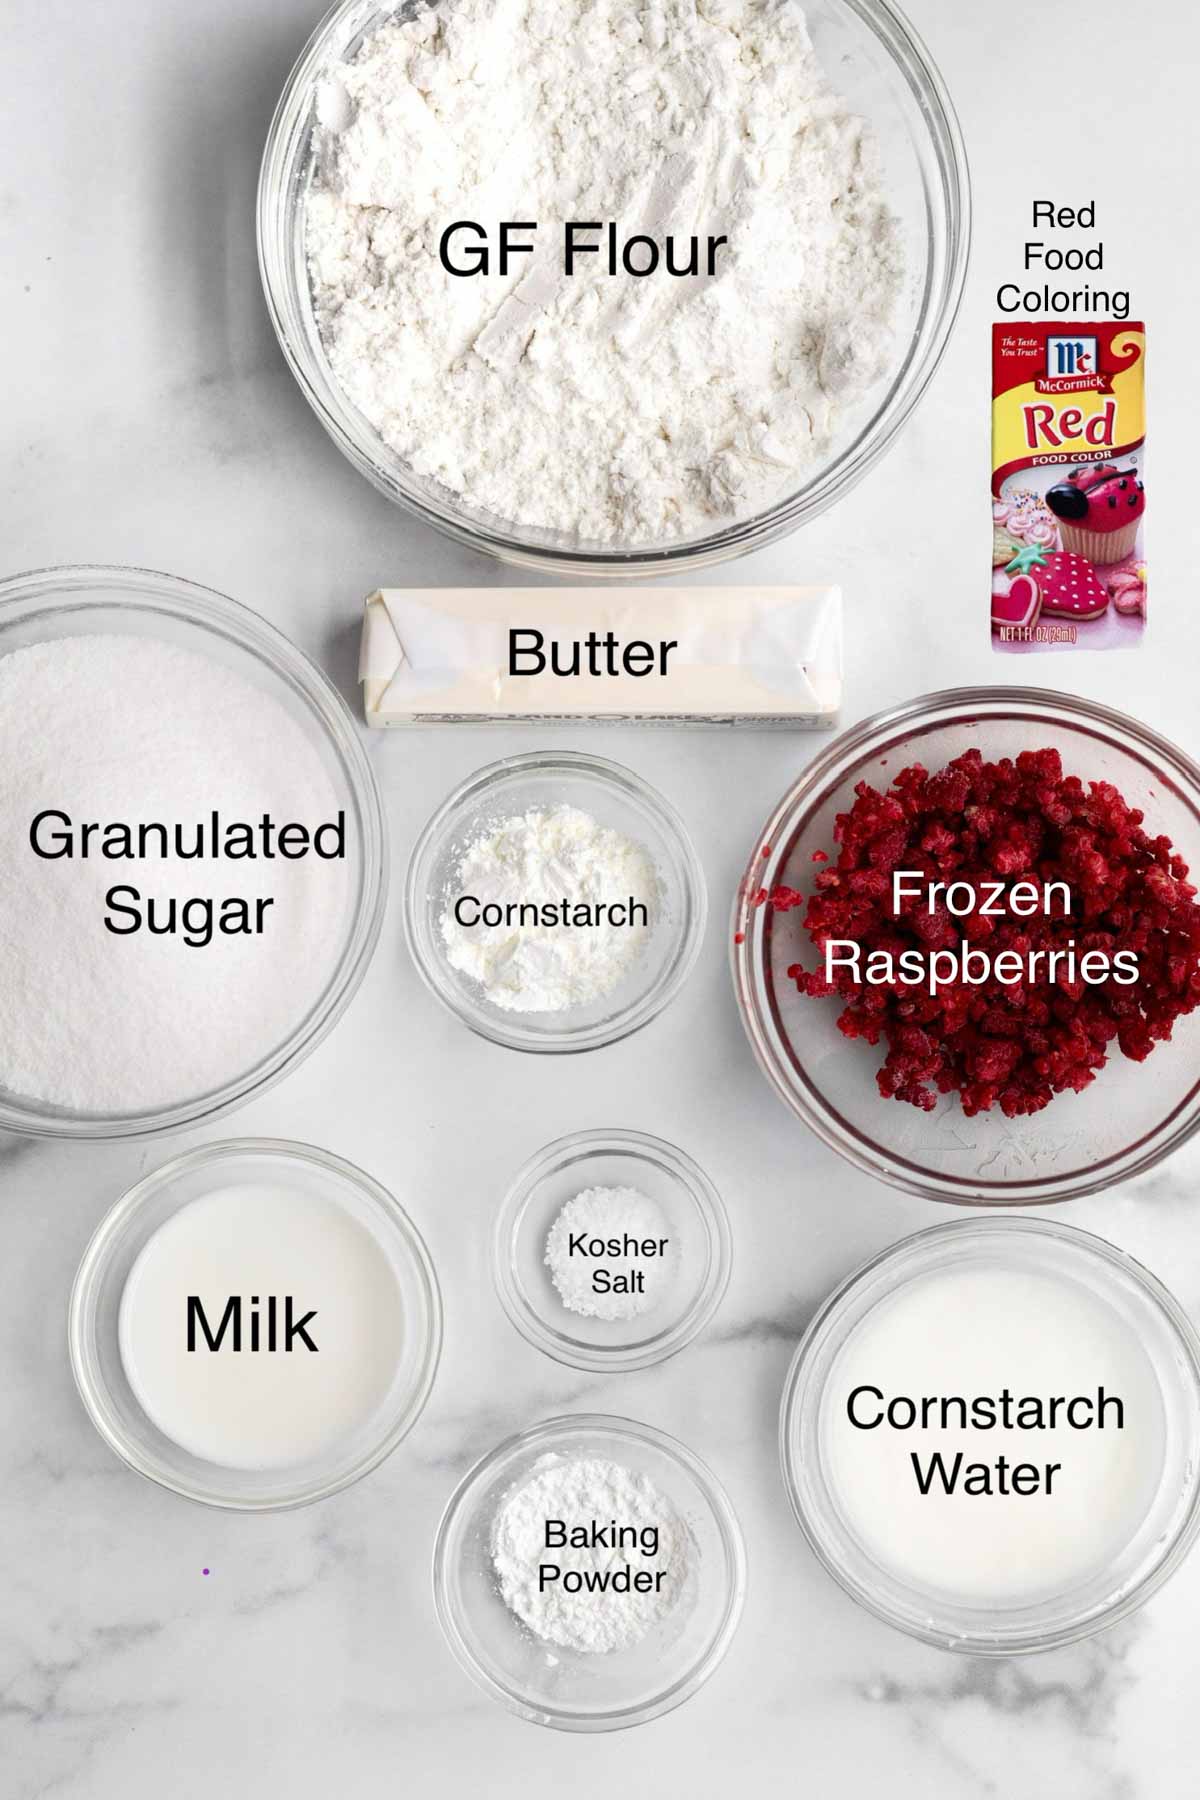 Gluten free flour, butter, red food coloring, granulated sugar, cornstarch, frozen raspberries, milk, kosher salt, cornstarch water, and baking powder in separate containers.